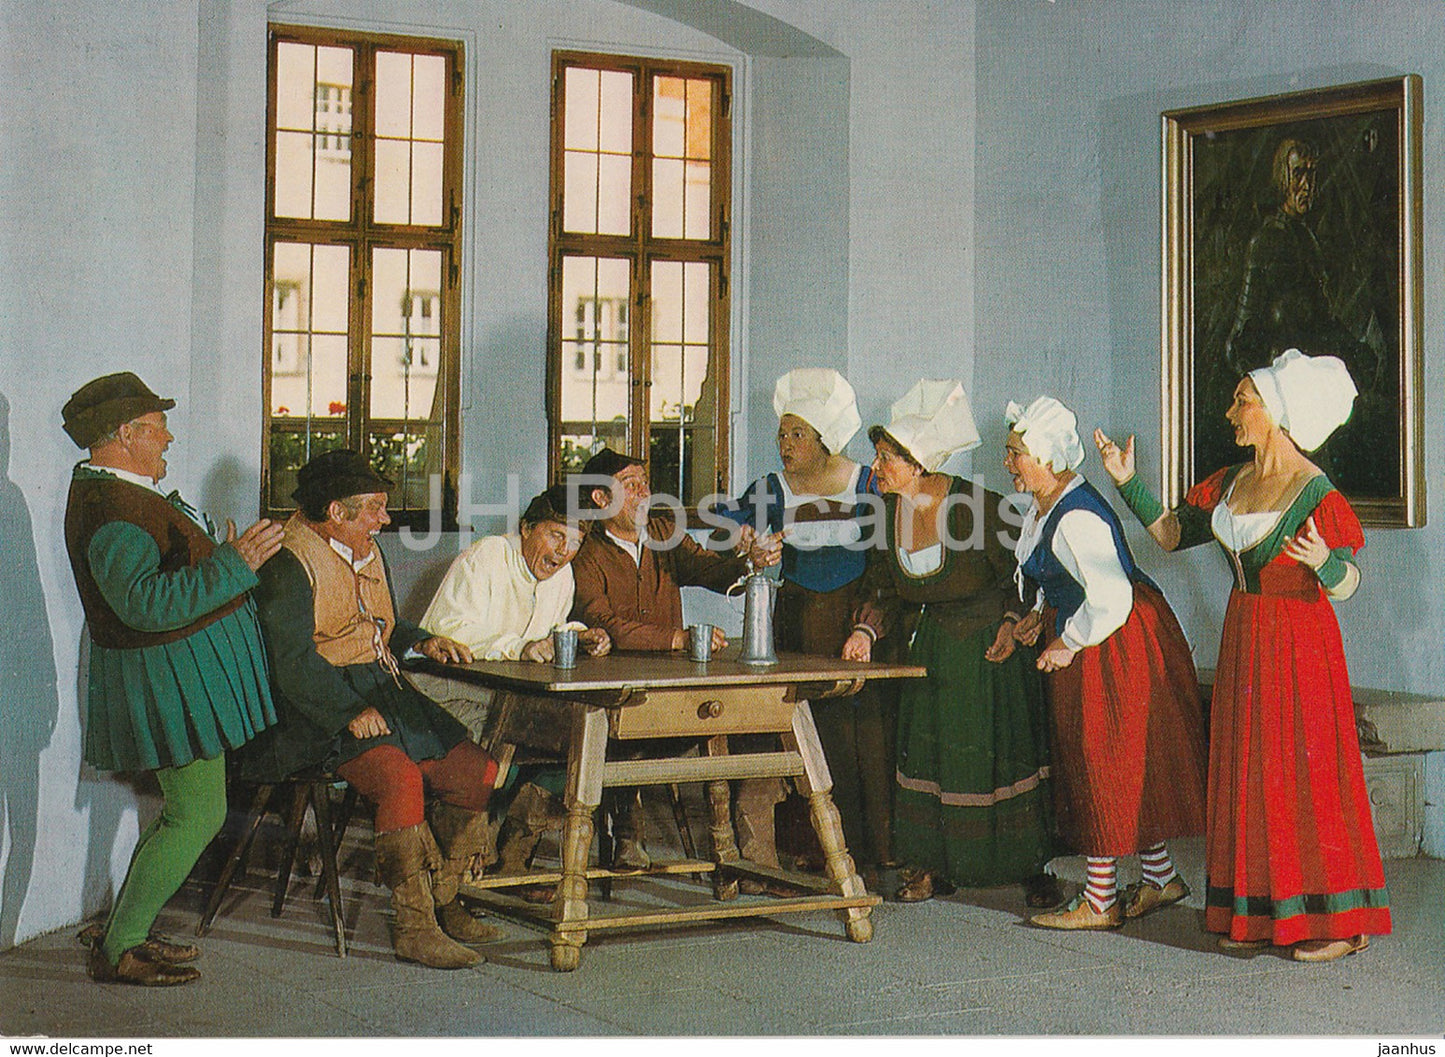 Rothenburg ob der Tauber - Hans Sachs Spiele - folk costumes - Germany - unused - JH Postcards